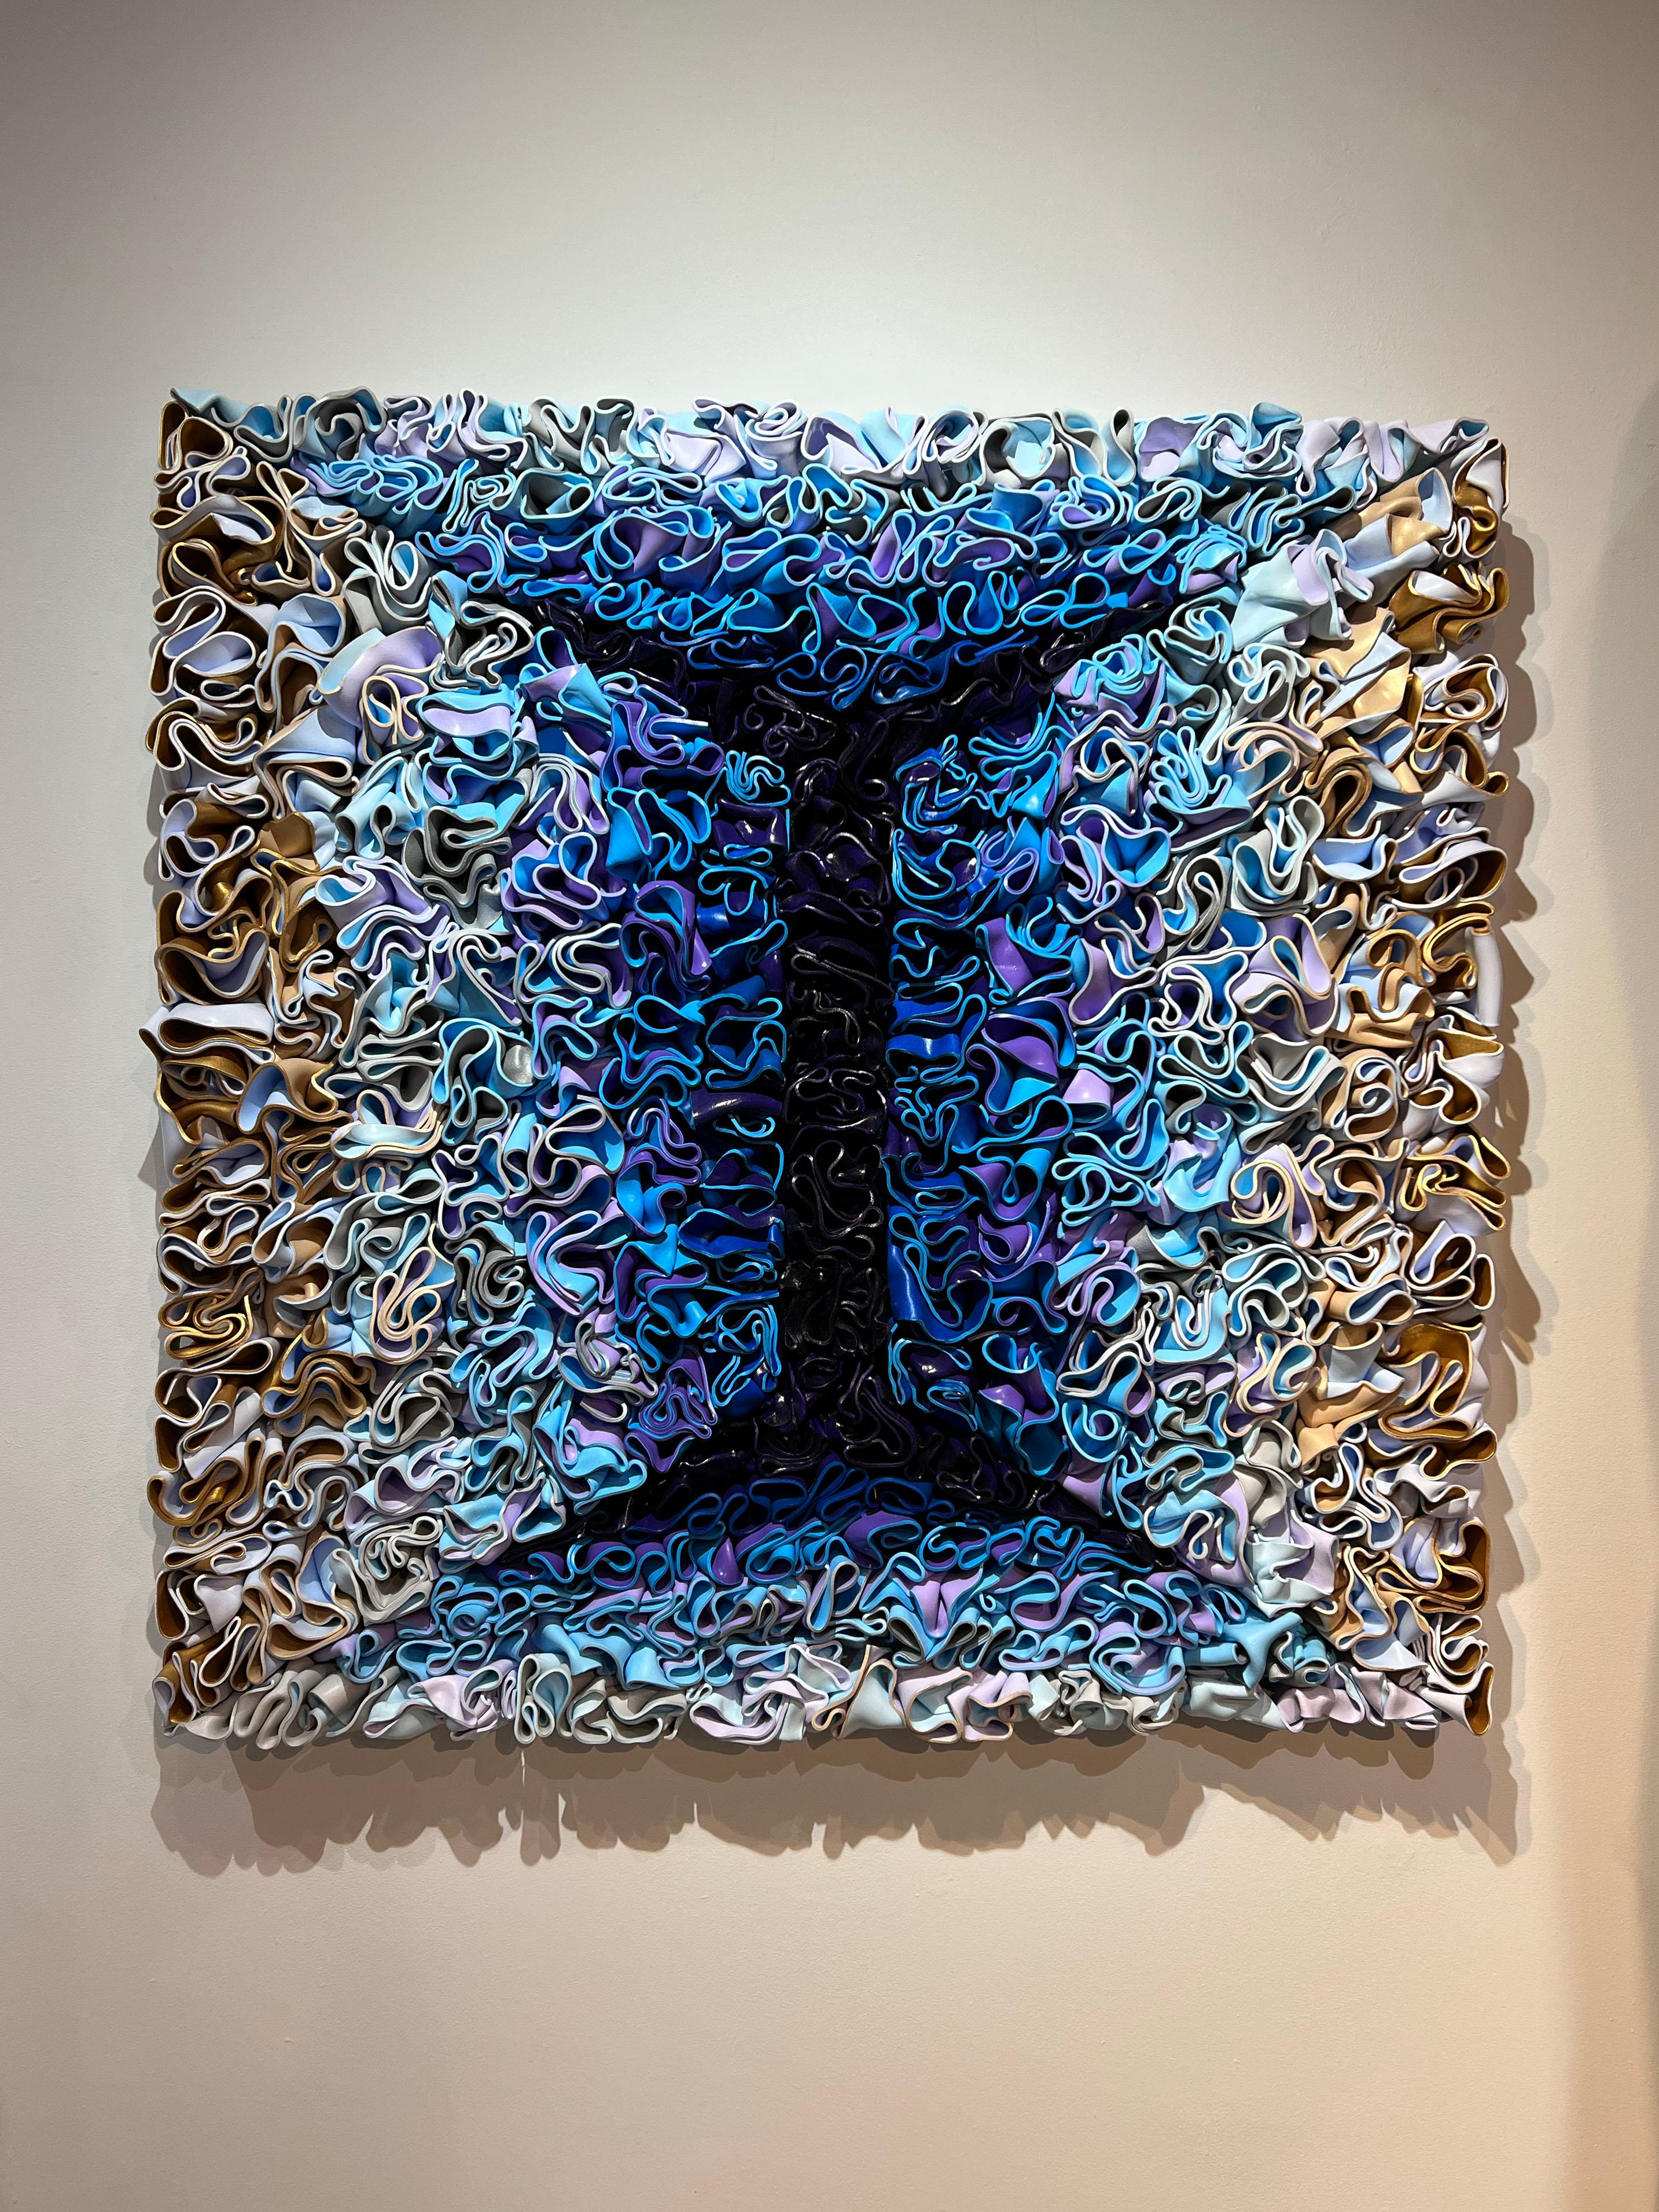 Tetrangle - Sculpture by Rick Lazes